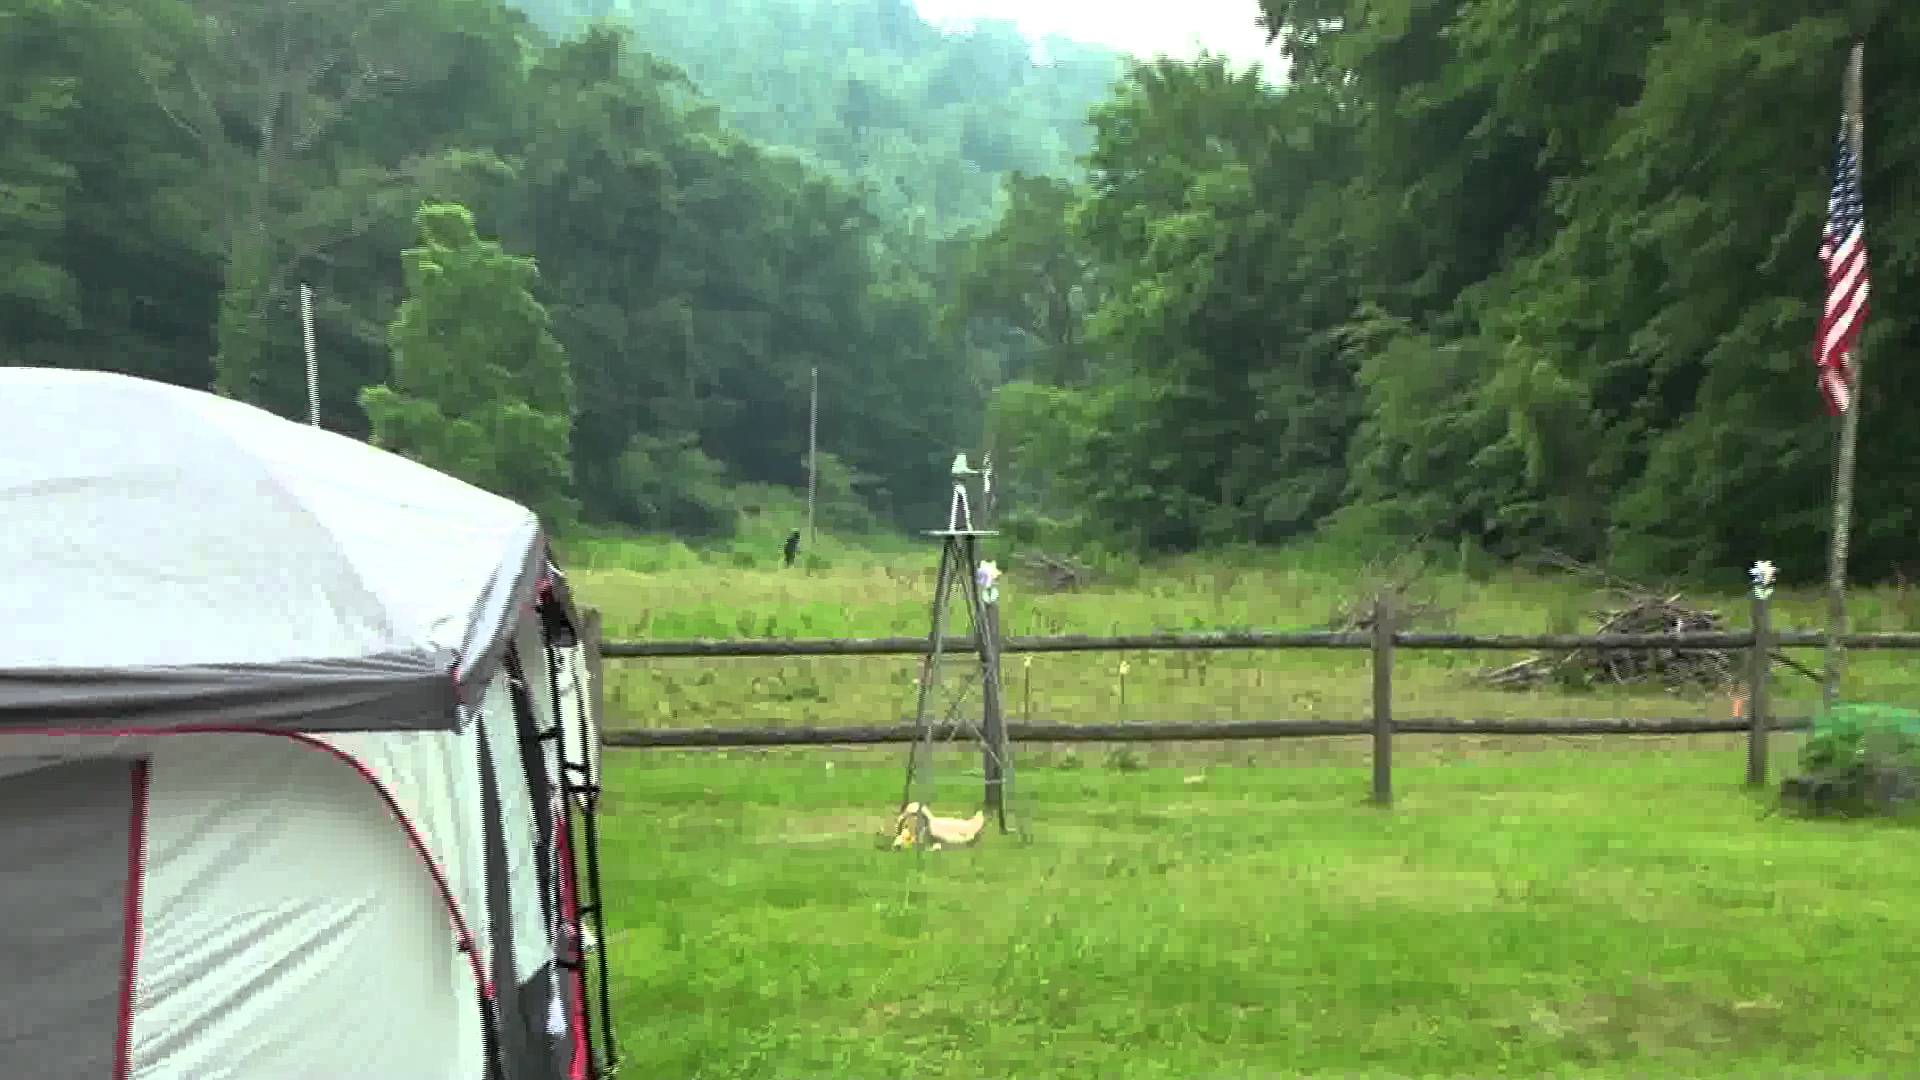 Bigfoot sighting in West Virginia - July 2011 - YouTube